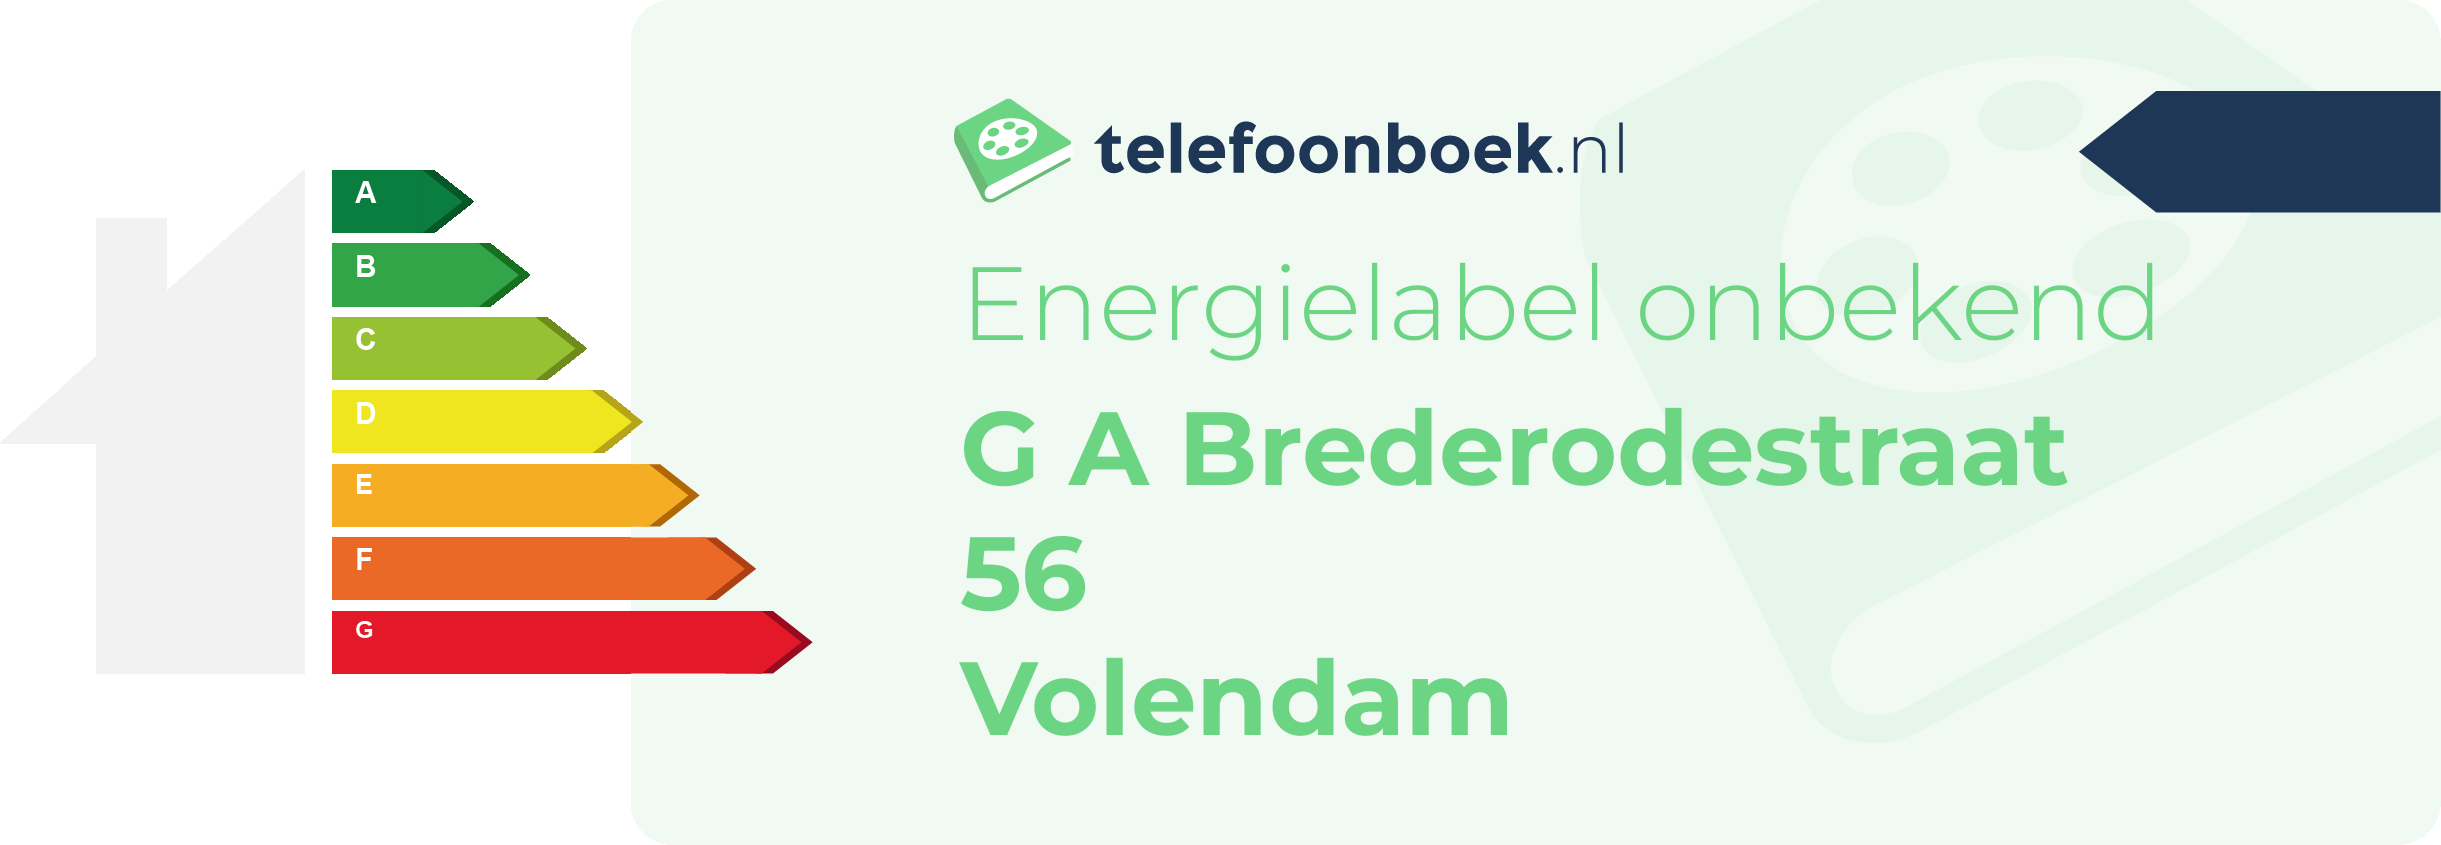 Energielabel G A Brederodestraat 56 Volendam